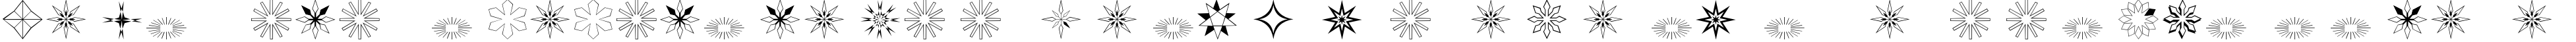 Пример написания шрифтом Stars2 текста на испанском